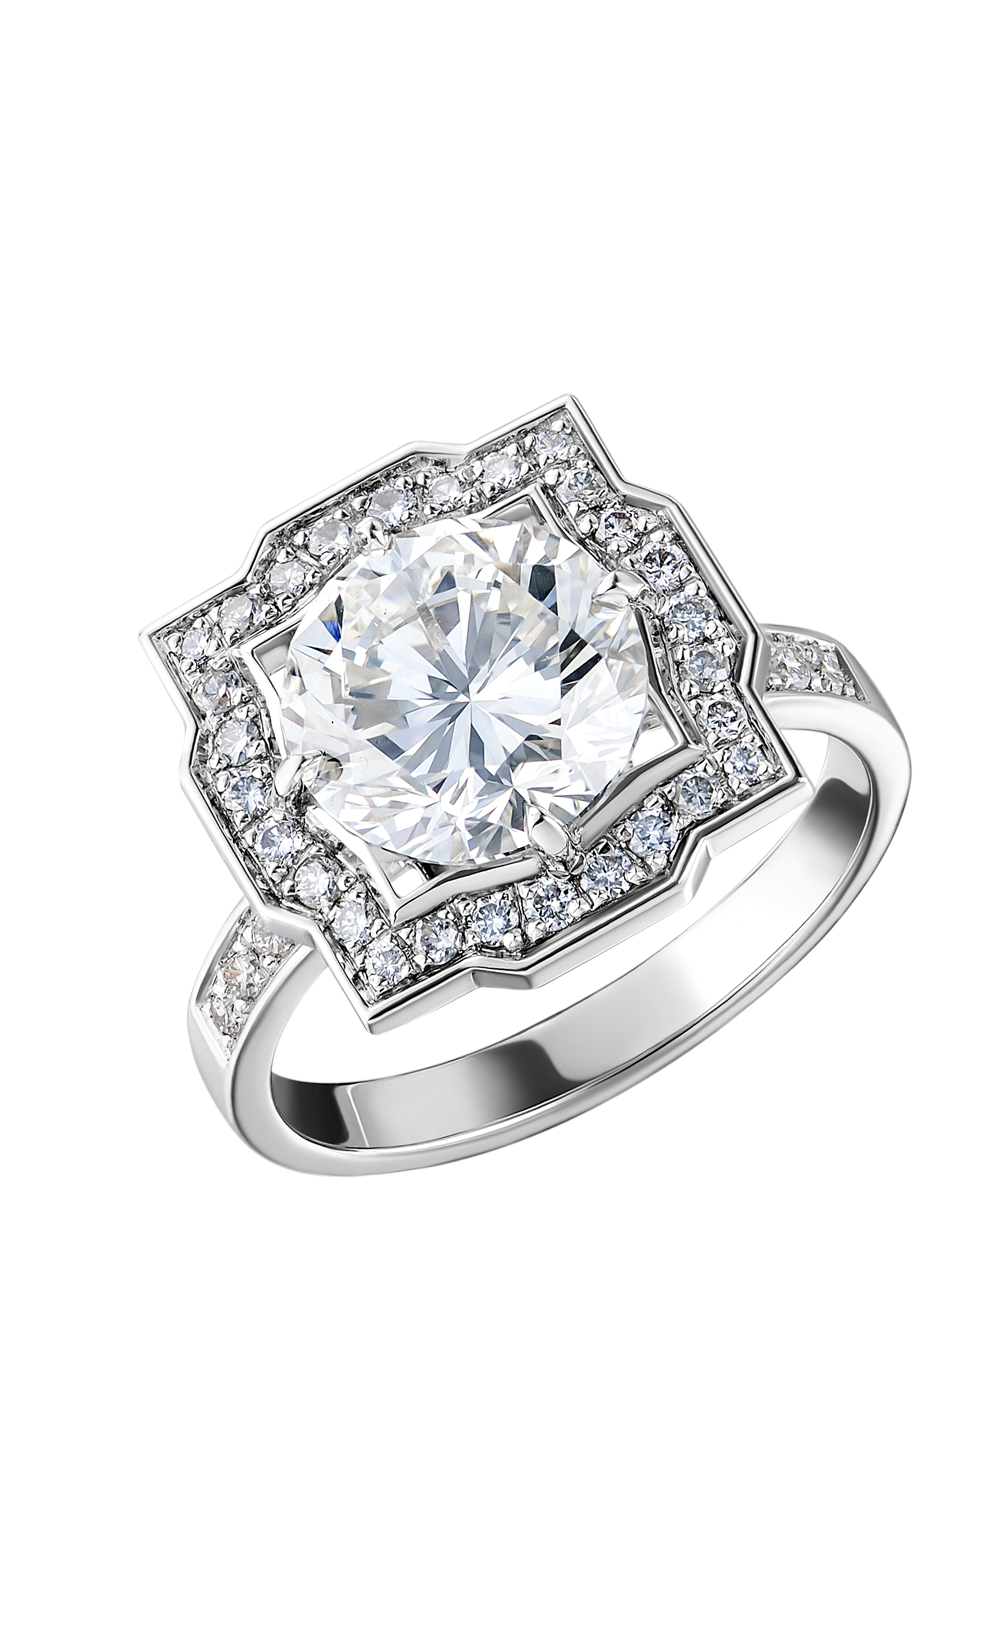 Ralph Diamonds Кольцо White Gold Diamonds 3.04 ct K/SI1 Ring 